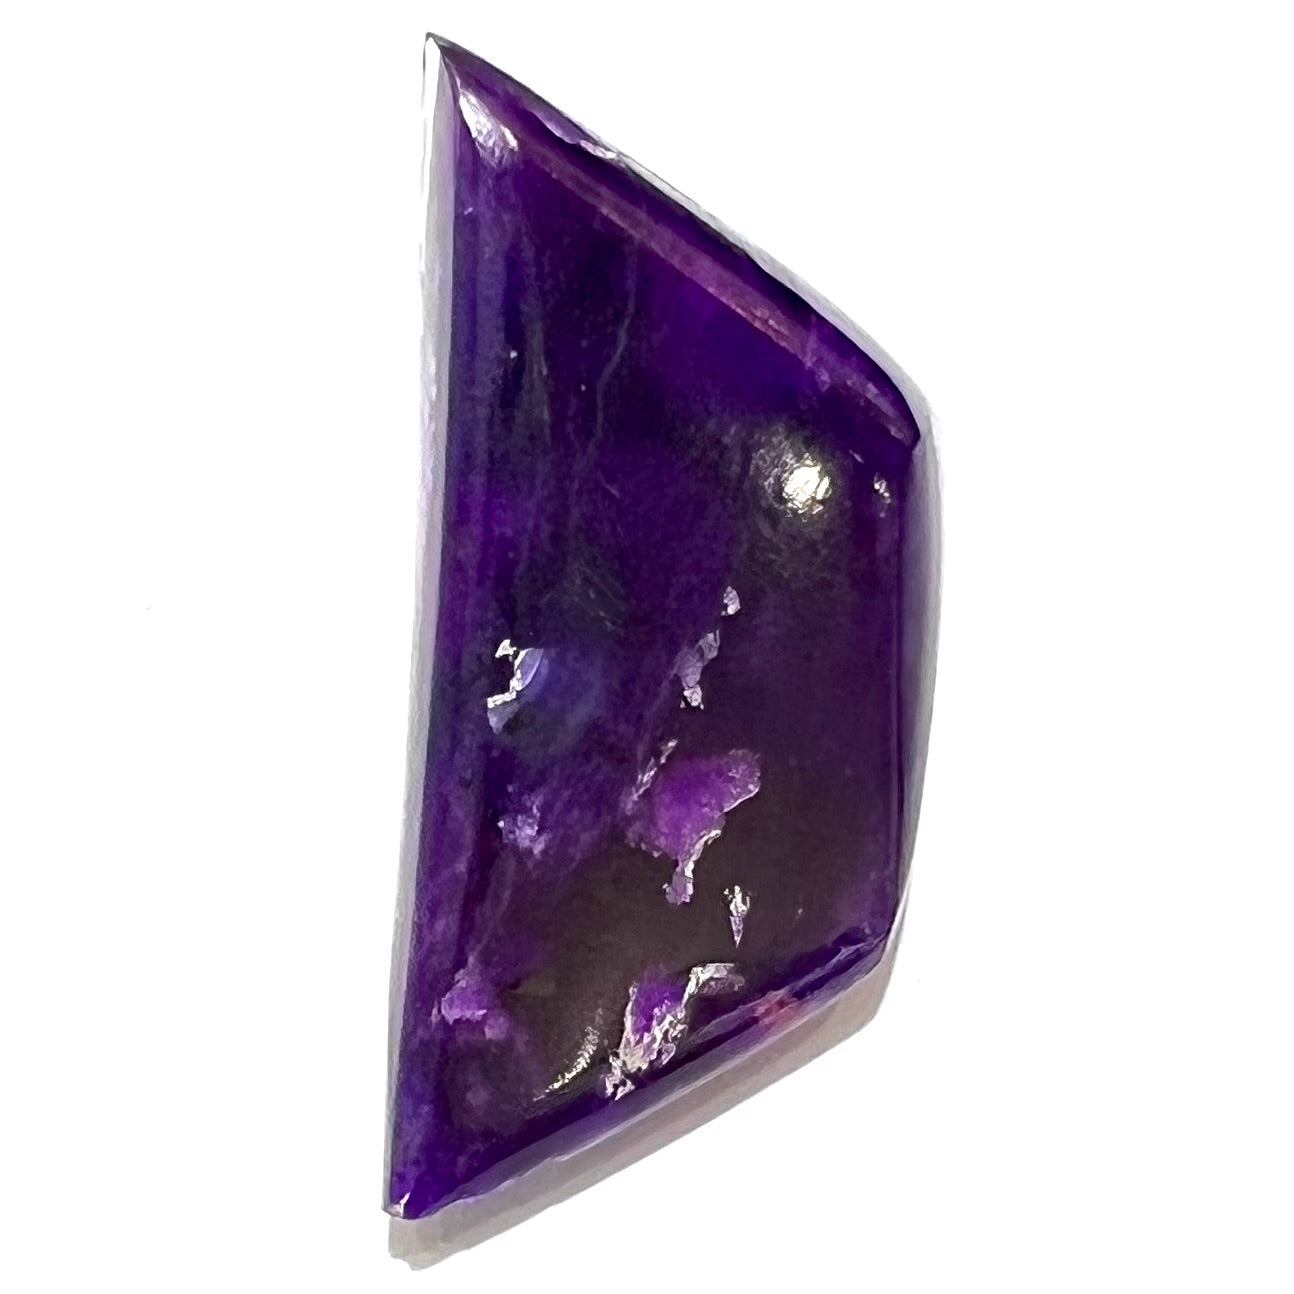 A freeform cabochon cut piece of dark purple sugilite.